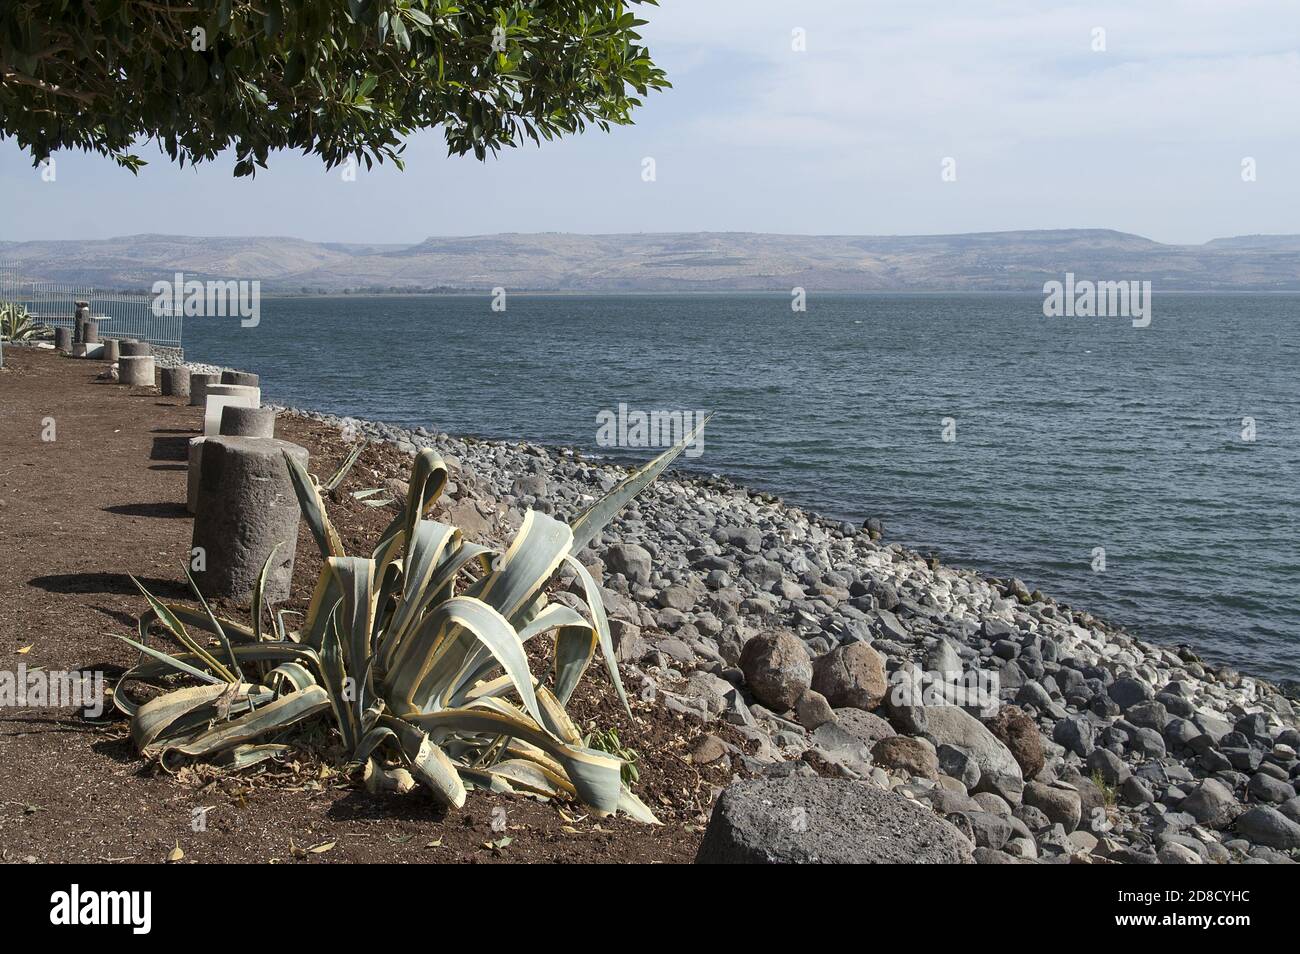 Jezioro Galilejskie, הכנרת, See Genezareth, بحيرة طبريا, Israel, Izrael, ישראל;  Agave on the shores of the Sea of Galilee. Stock Photo